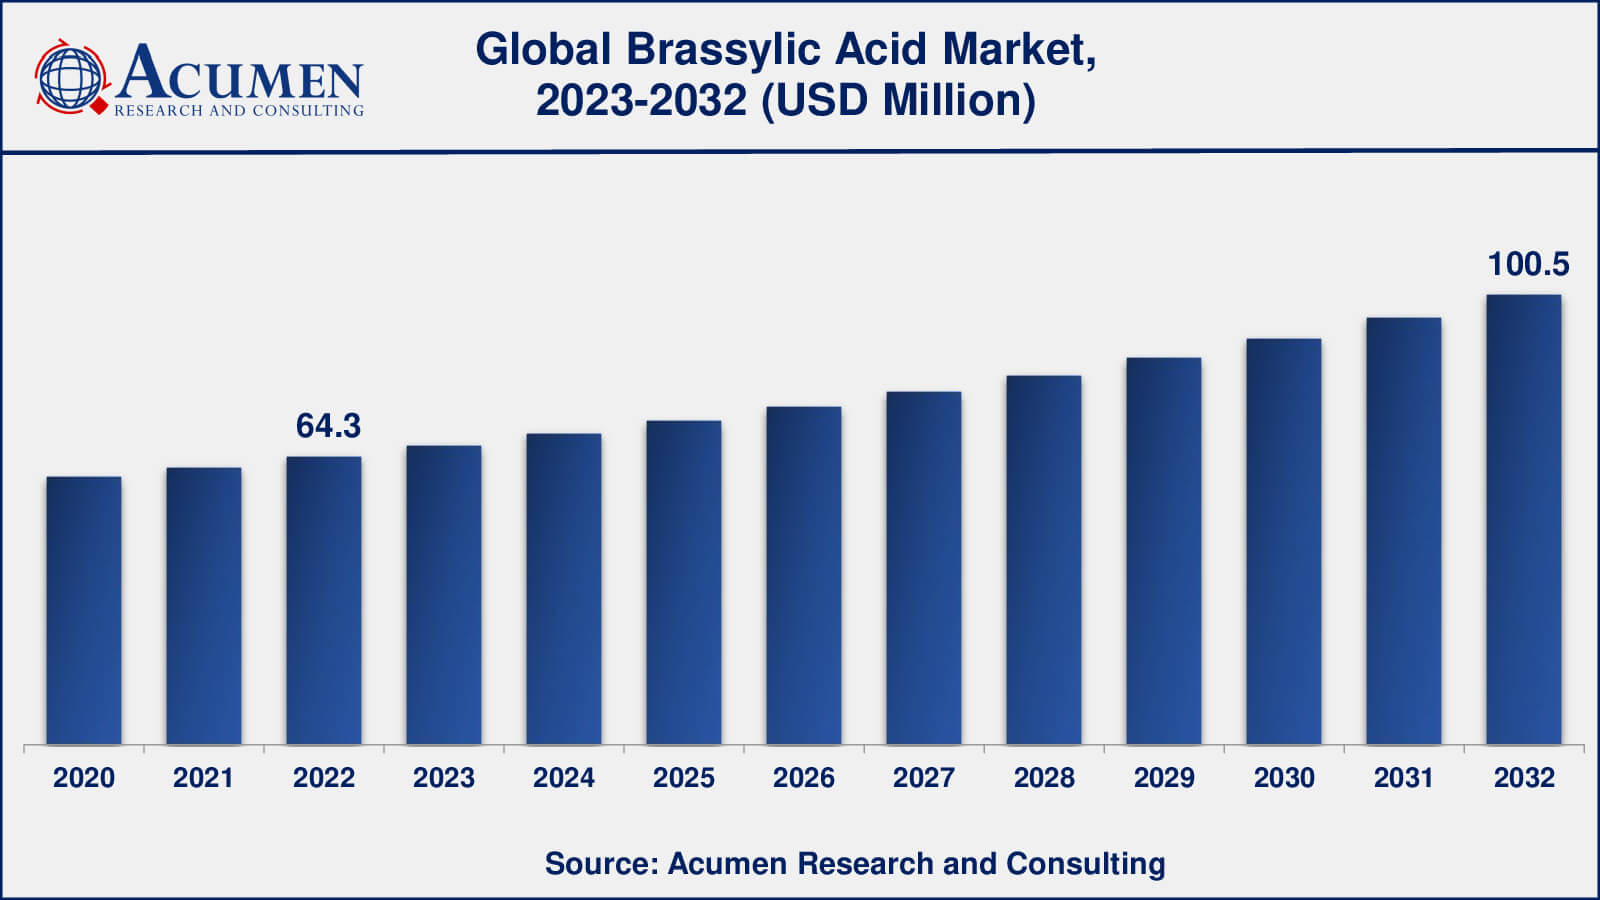 Brassylic Acid Market Analysis